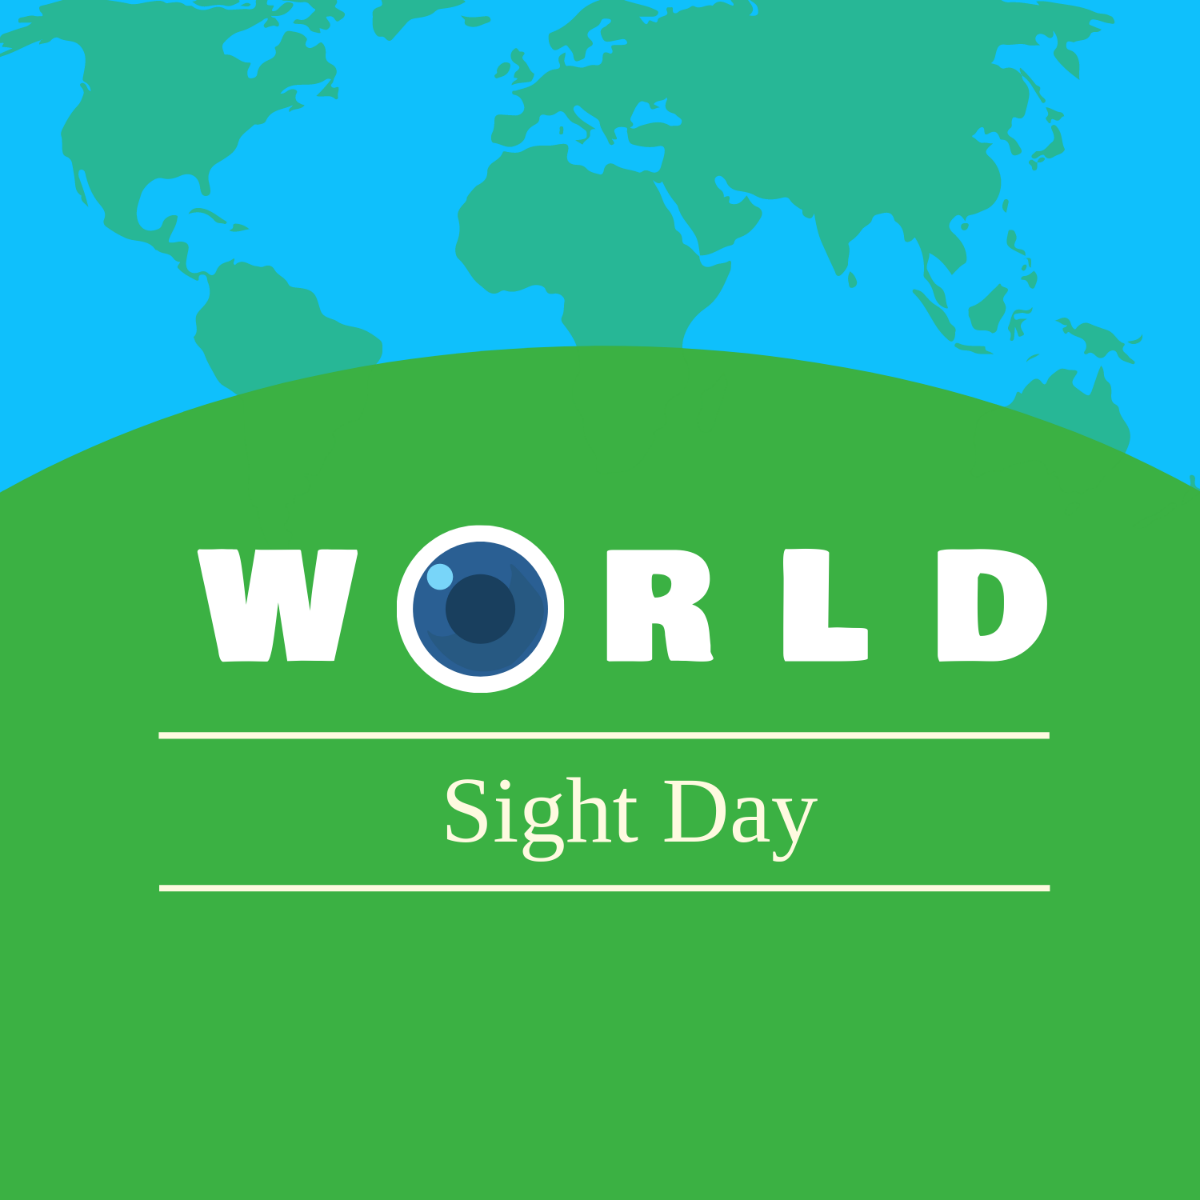 Free World Sight Day Illustration Template